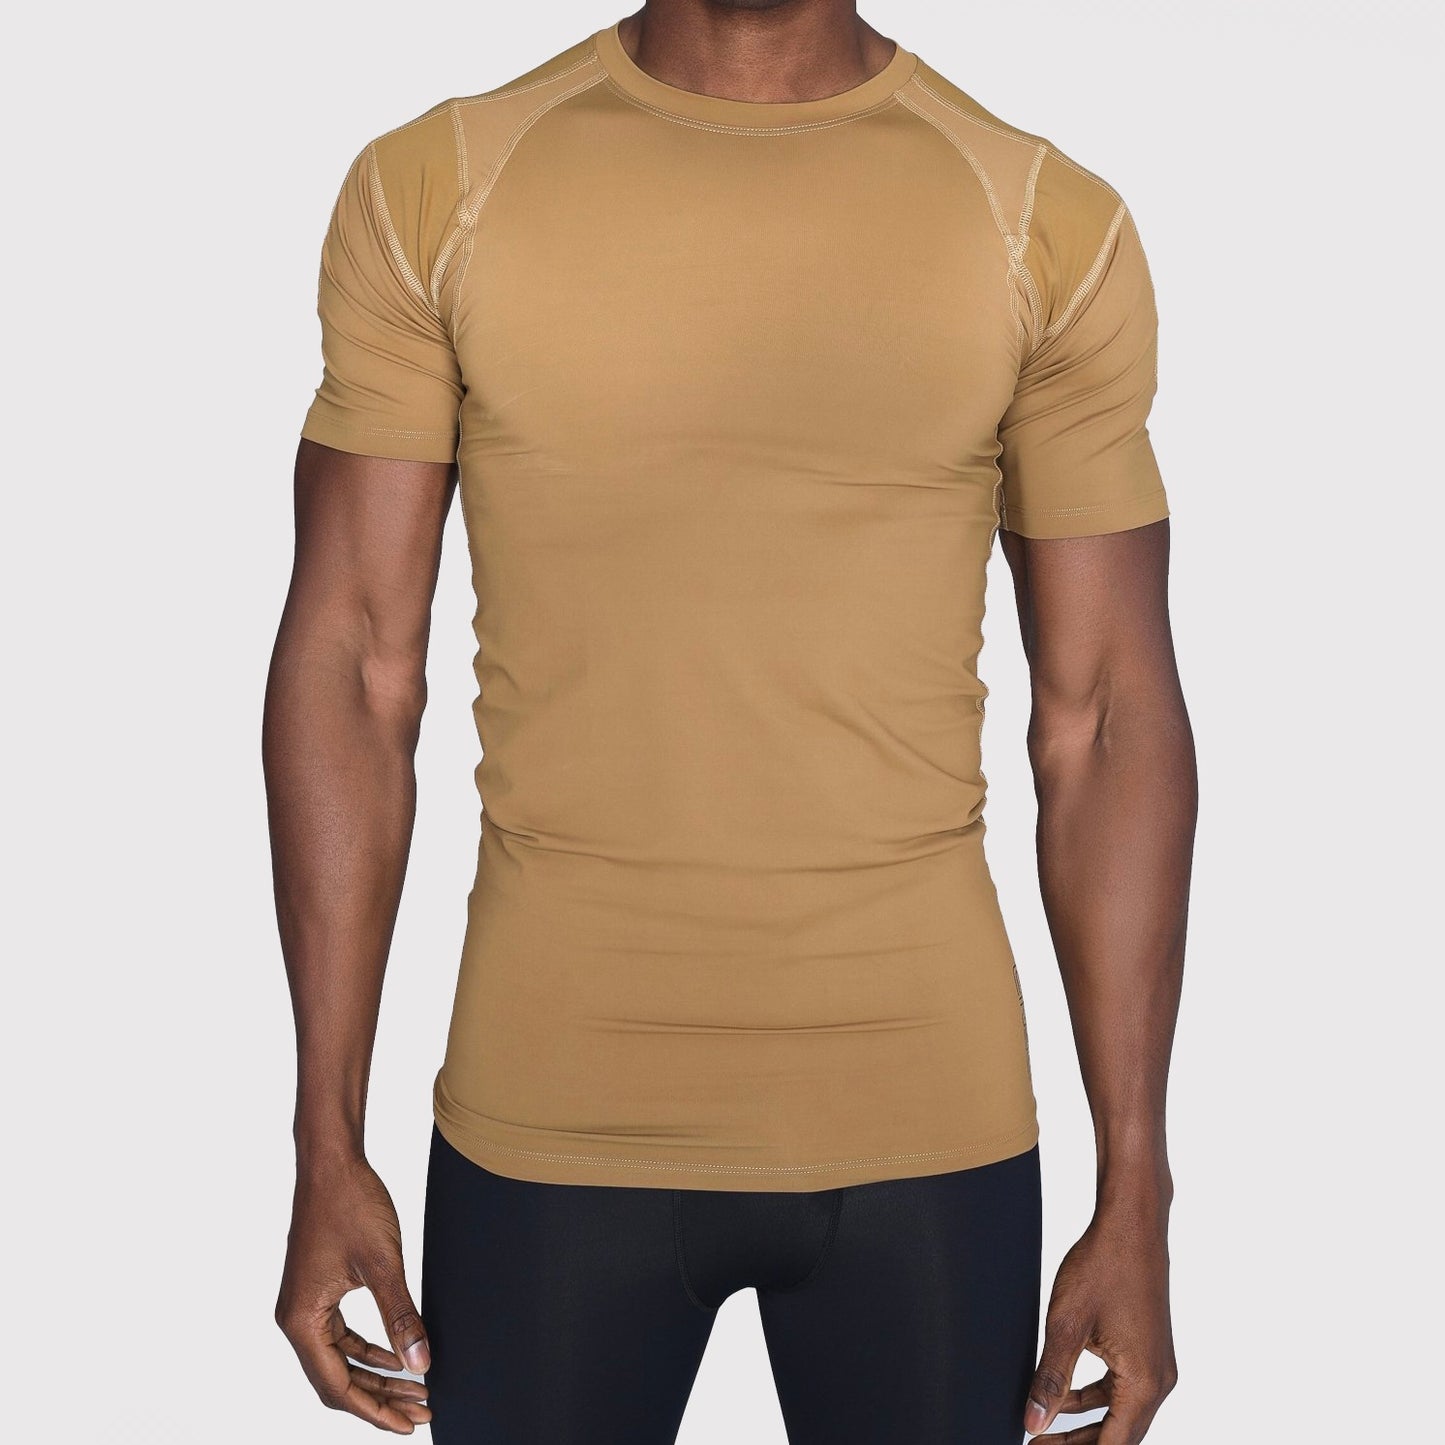 Zensah Bold Compression Short Sleeve Shirt T-Shirt - Anti-odor, Moisture Wicking, Eliminate Skin Irritation, Black, Extra Large